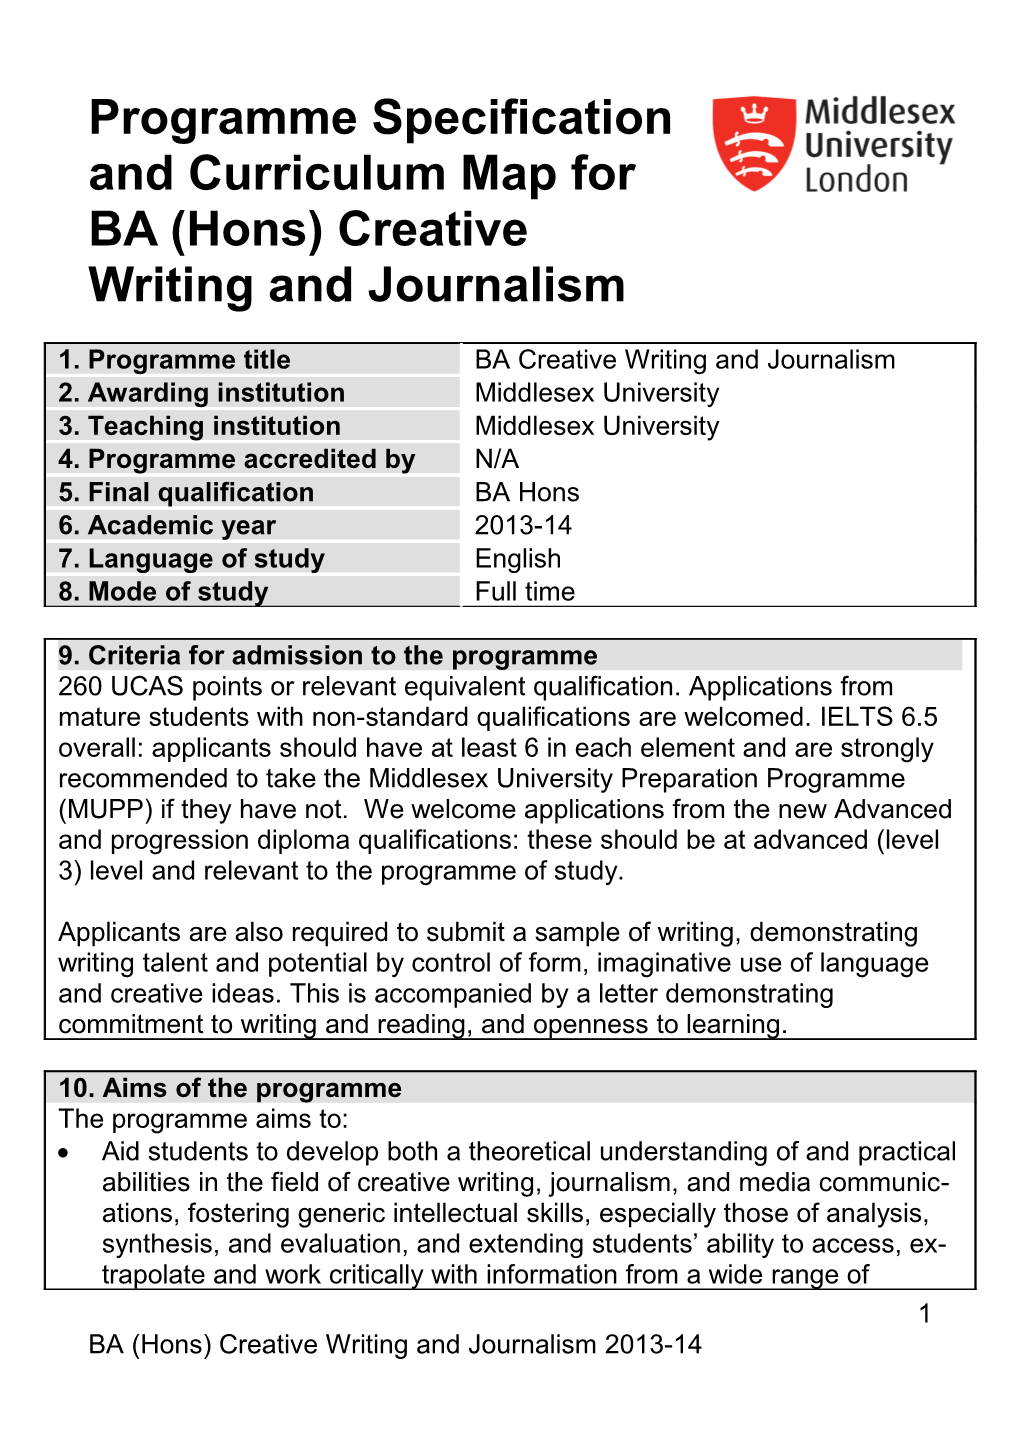 BA (Hons) Creative Writing and Journalism 2013-14